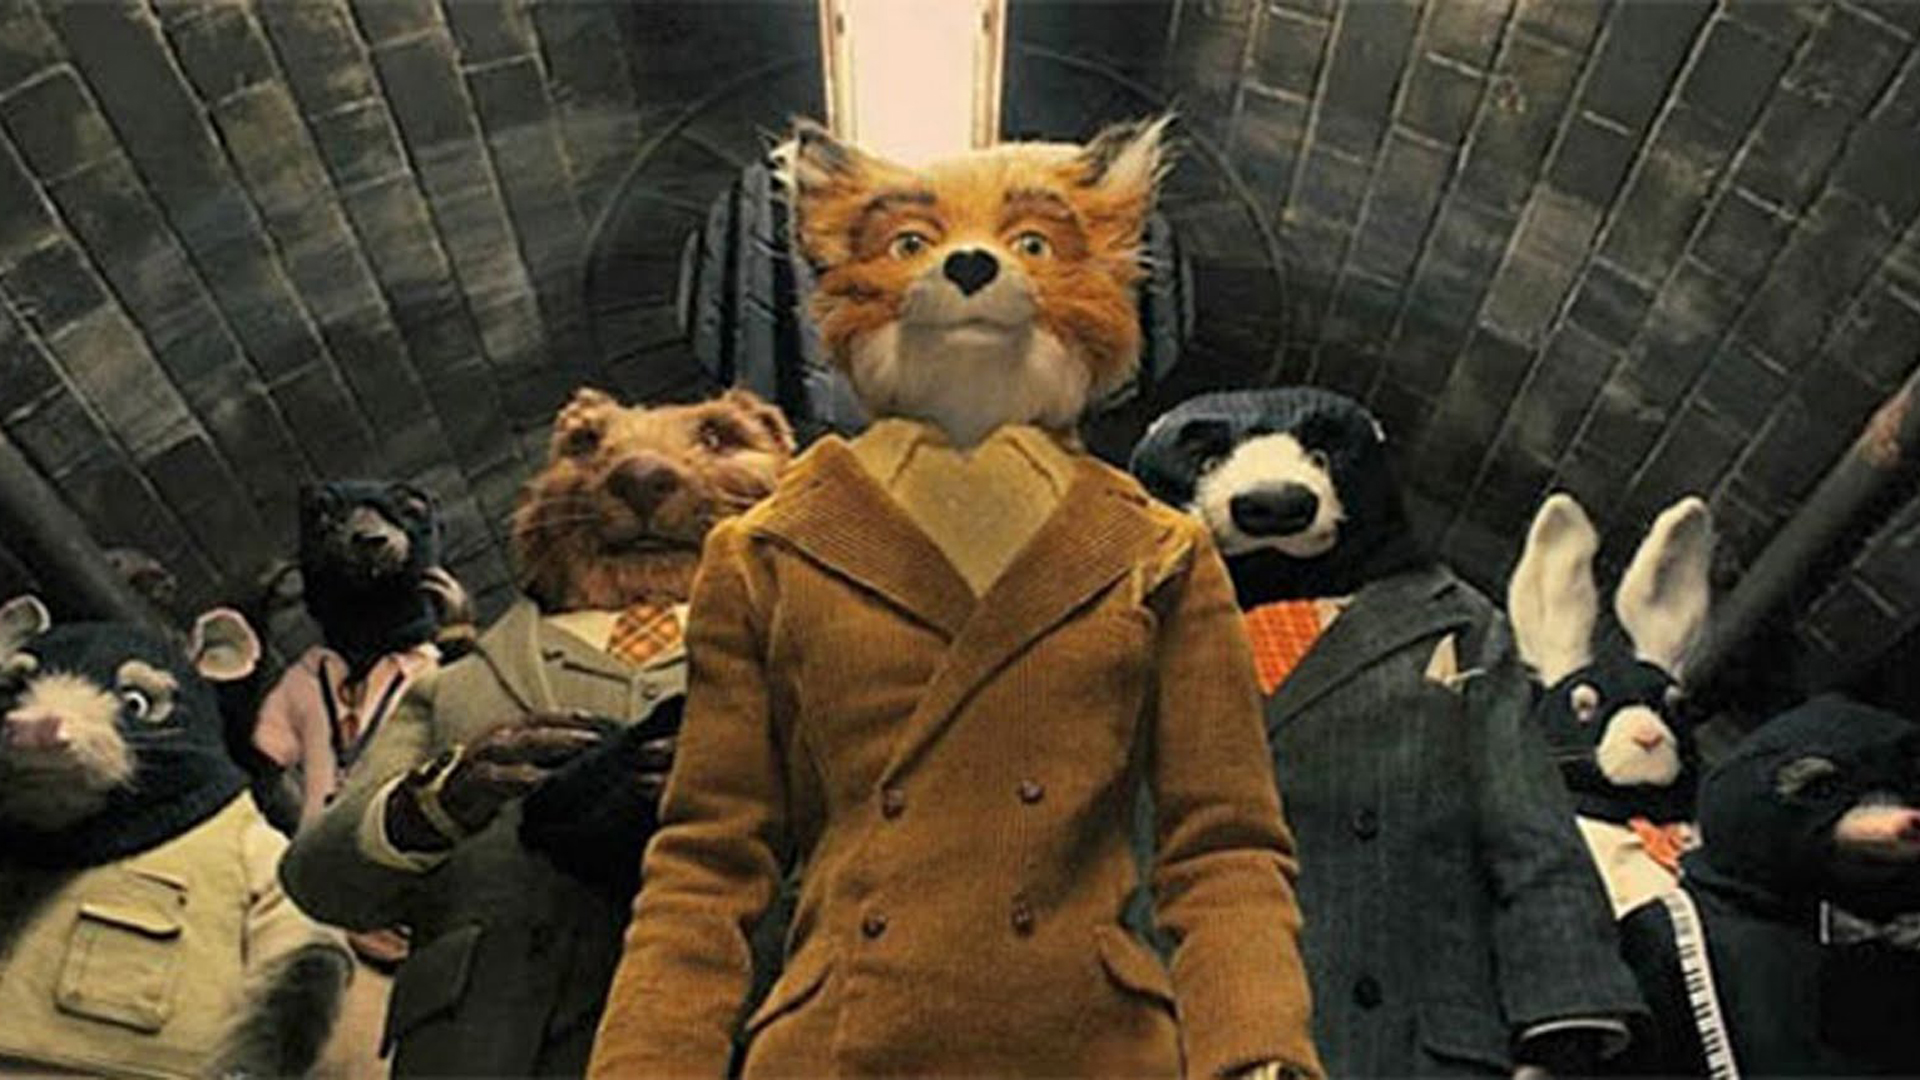 2009 Fantastic Mr. Fox